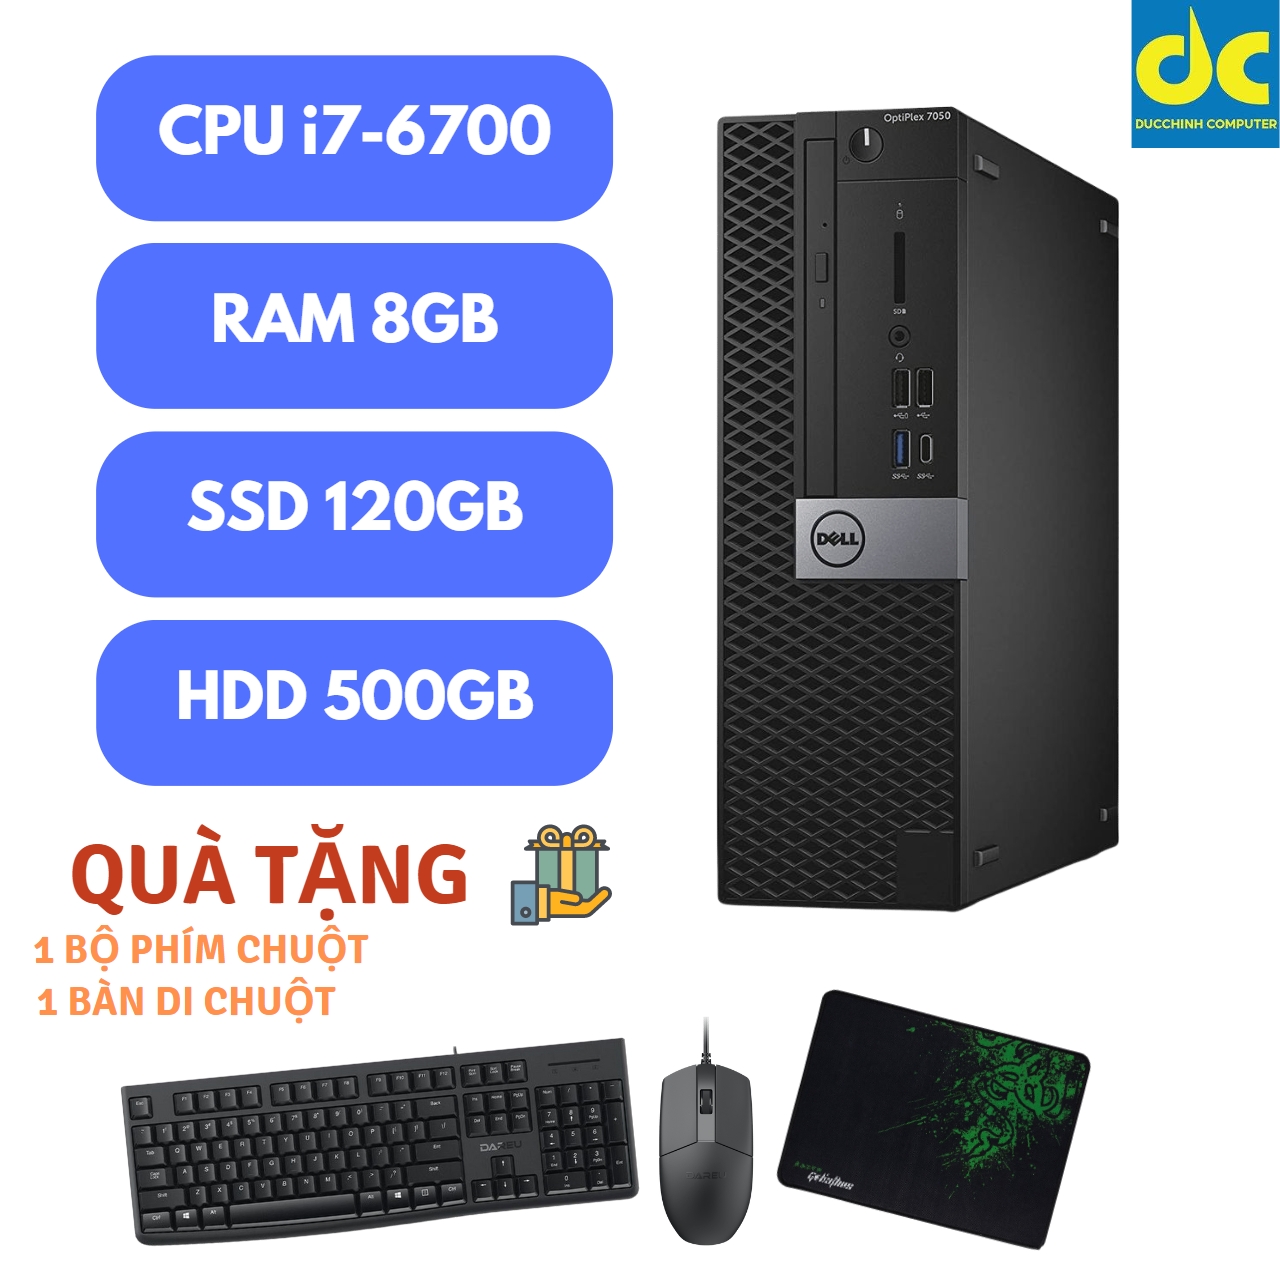 Máy Tính Dell Optiplex 3050/5050/7050, Chip i7-6700, Ram 8GB, SSD 120GB, HDD 500GB, DVD